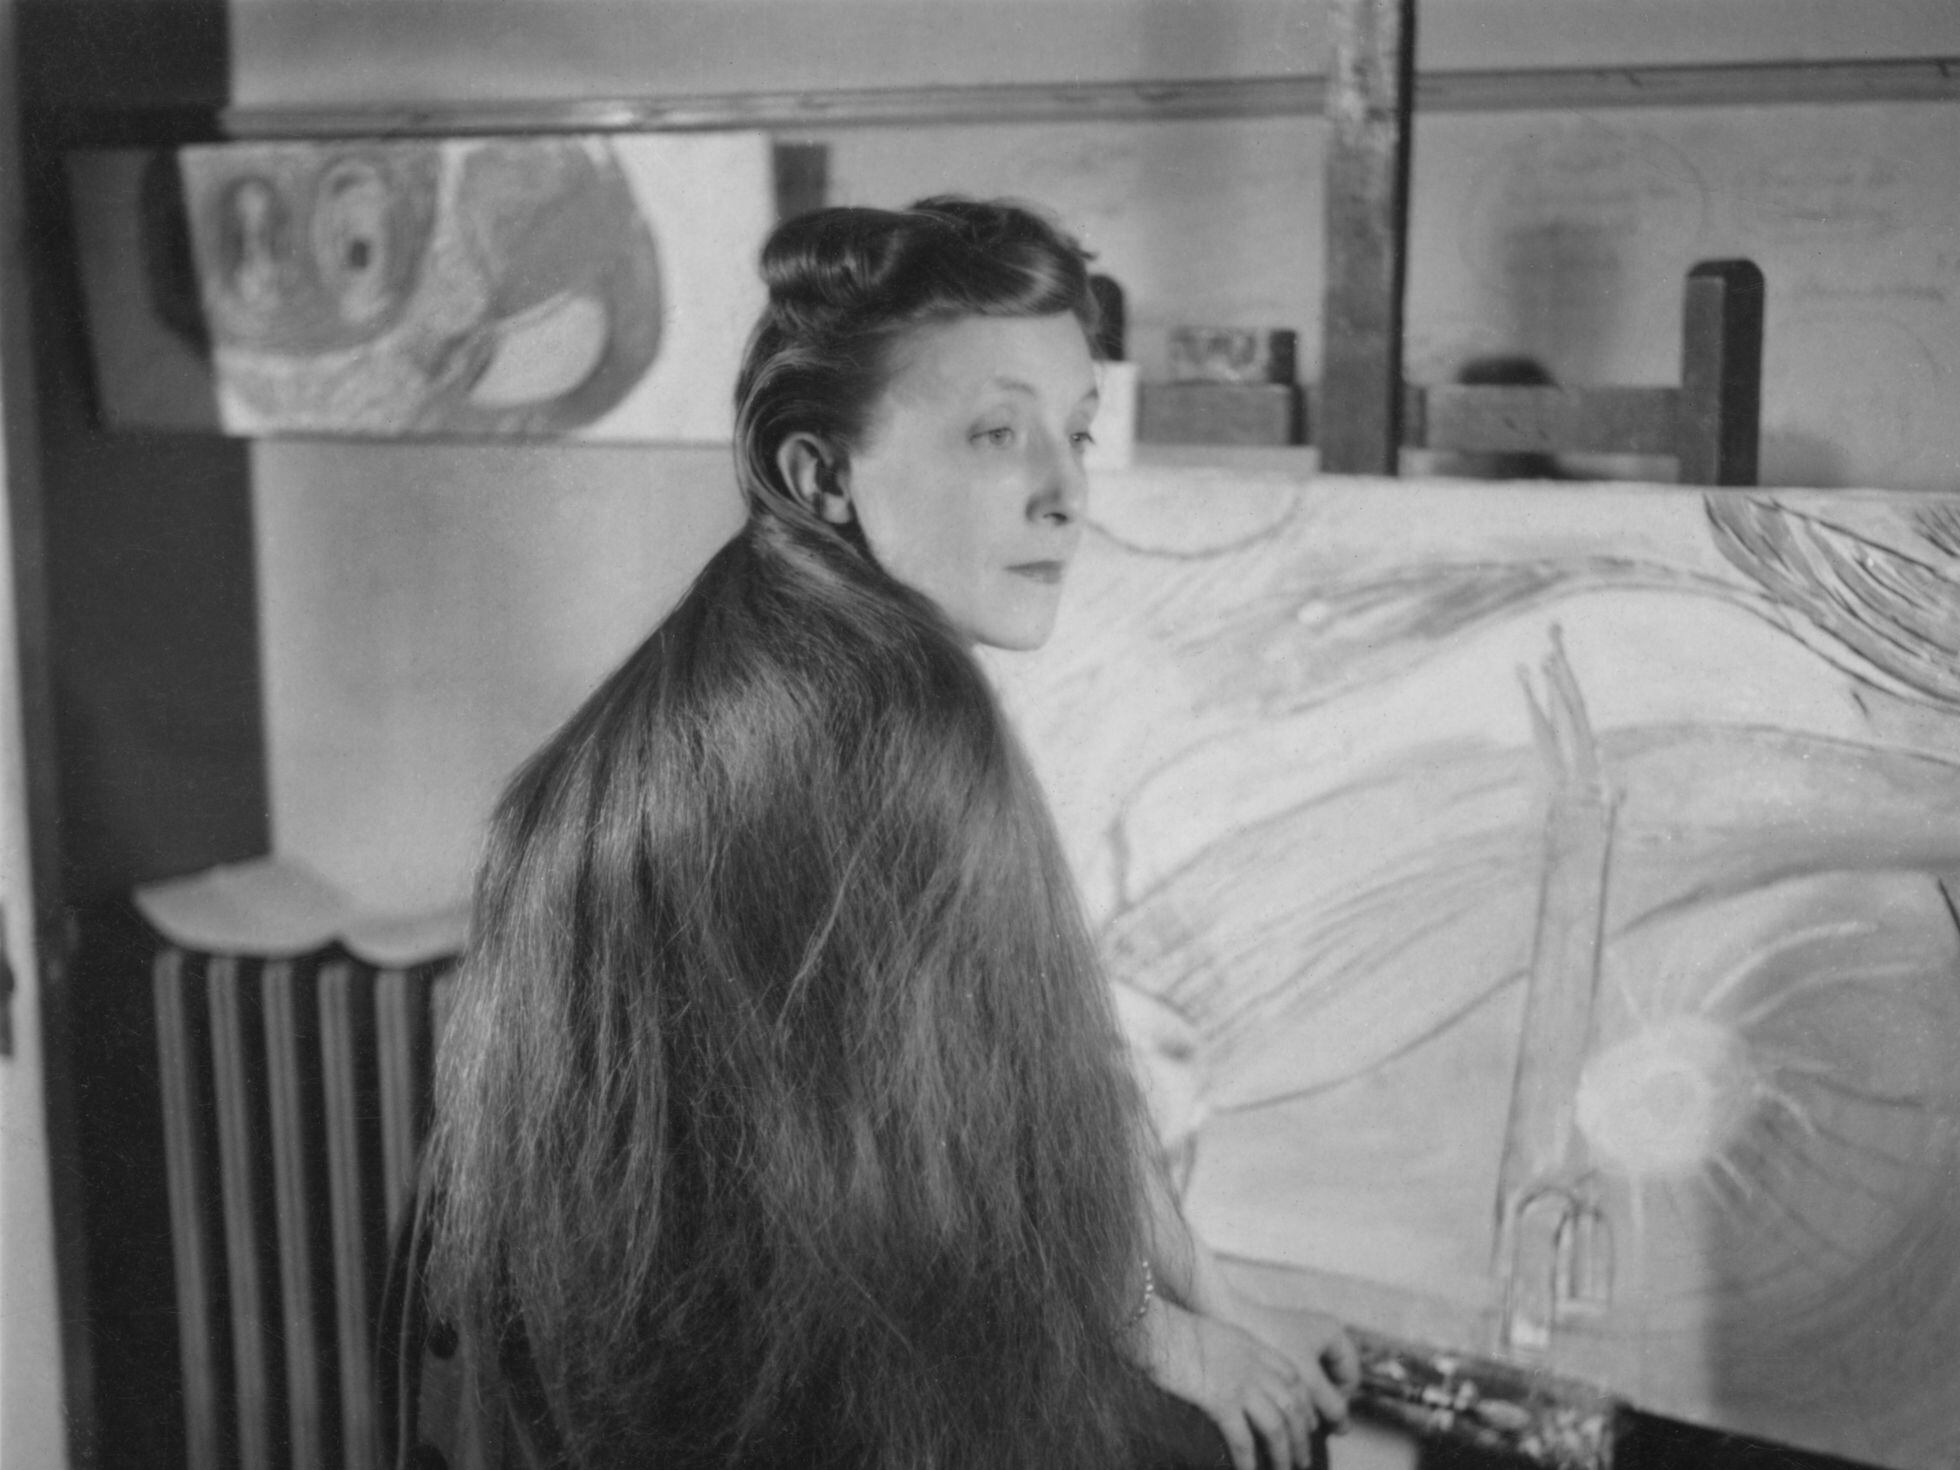 Inside artist Louise Bourgeois' New York home